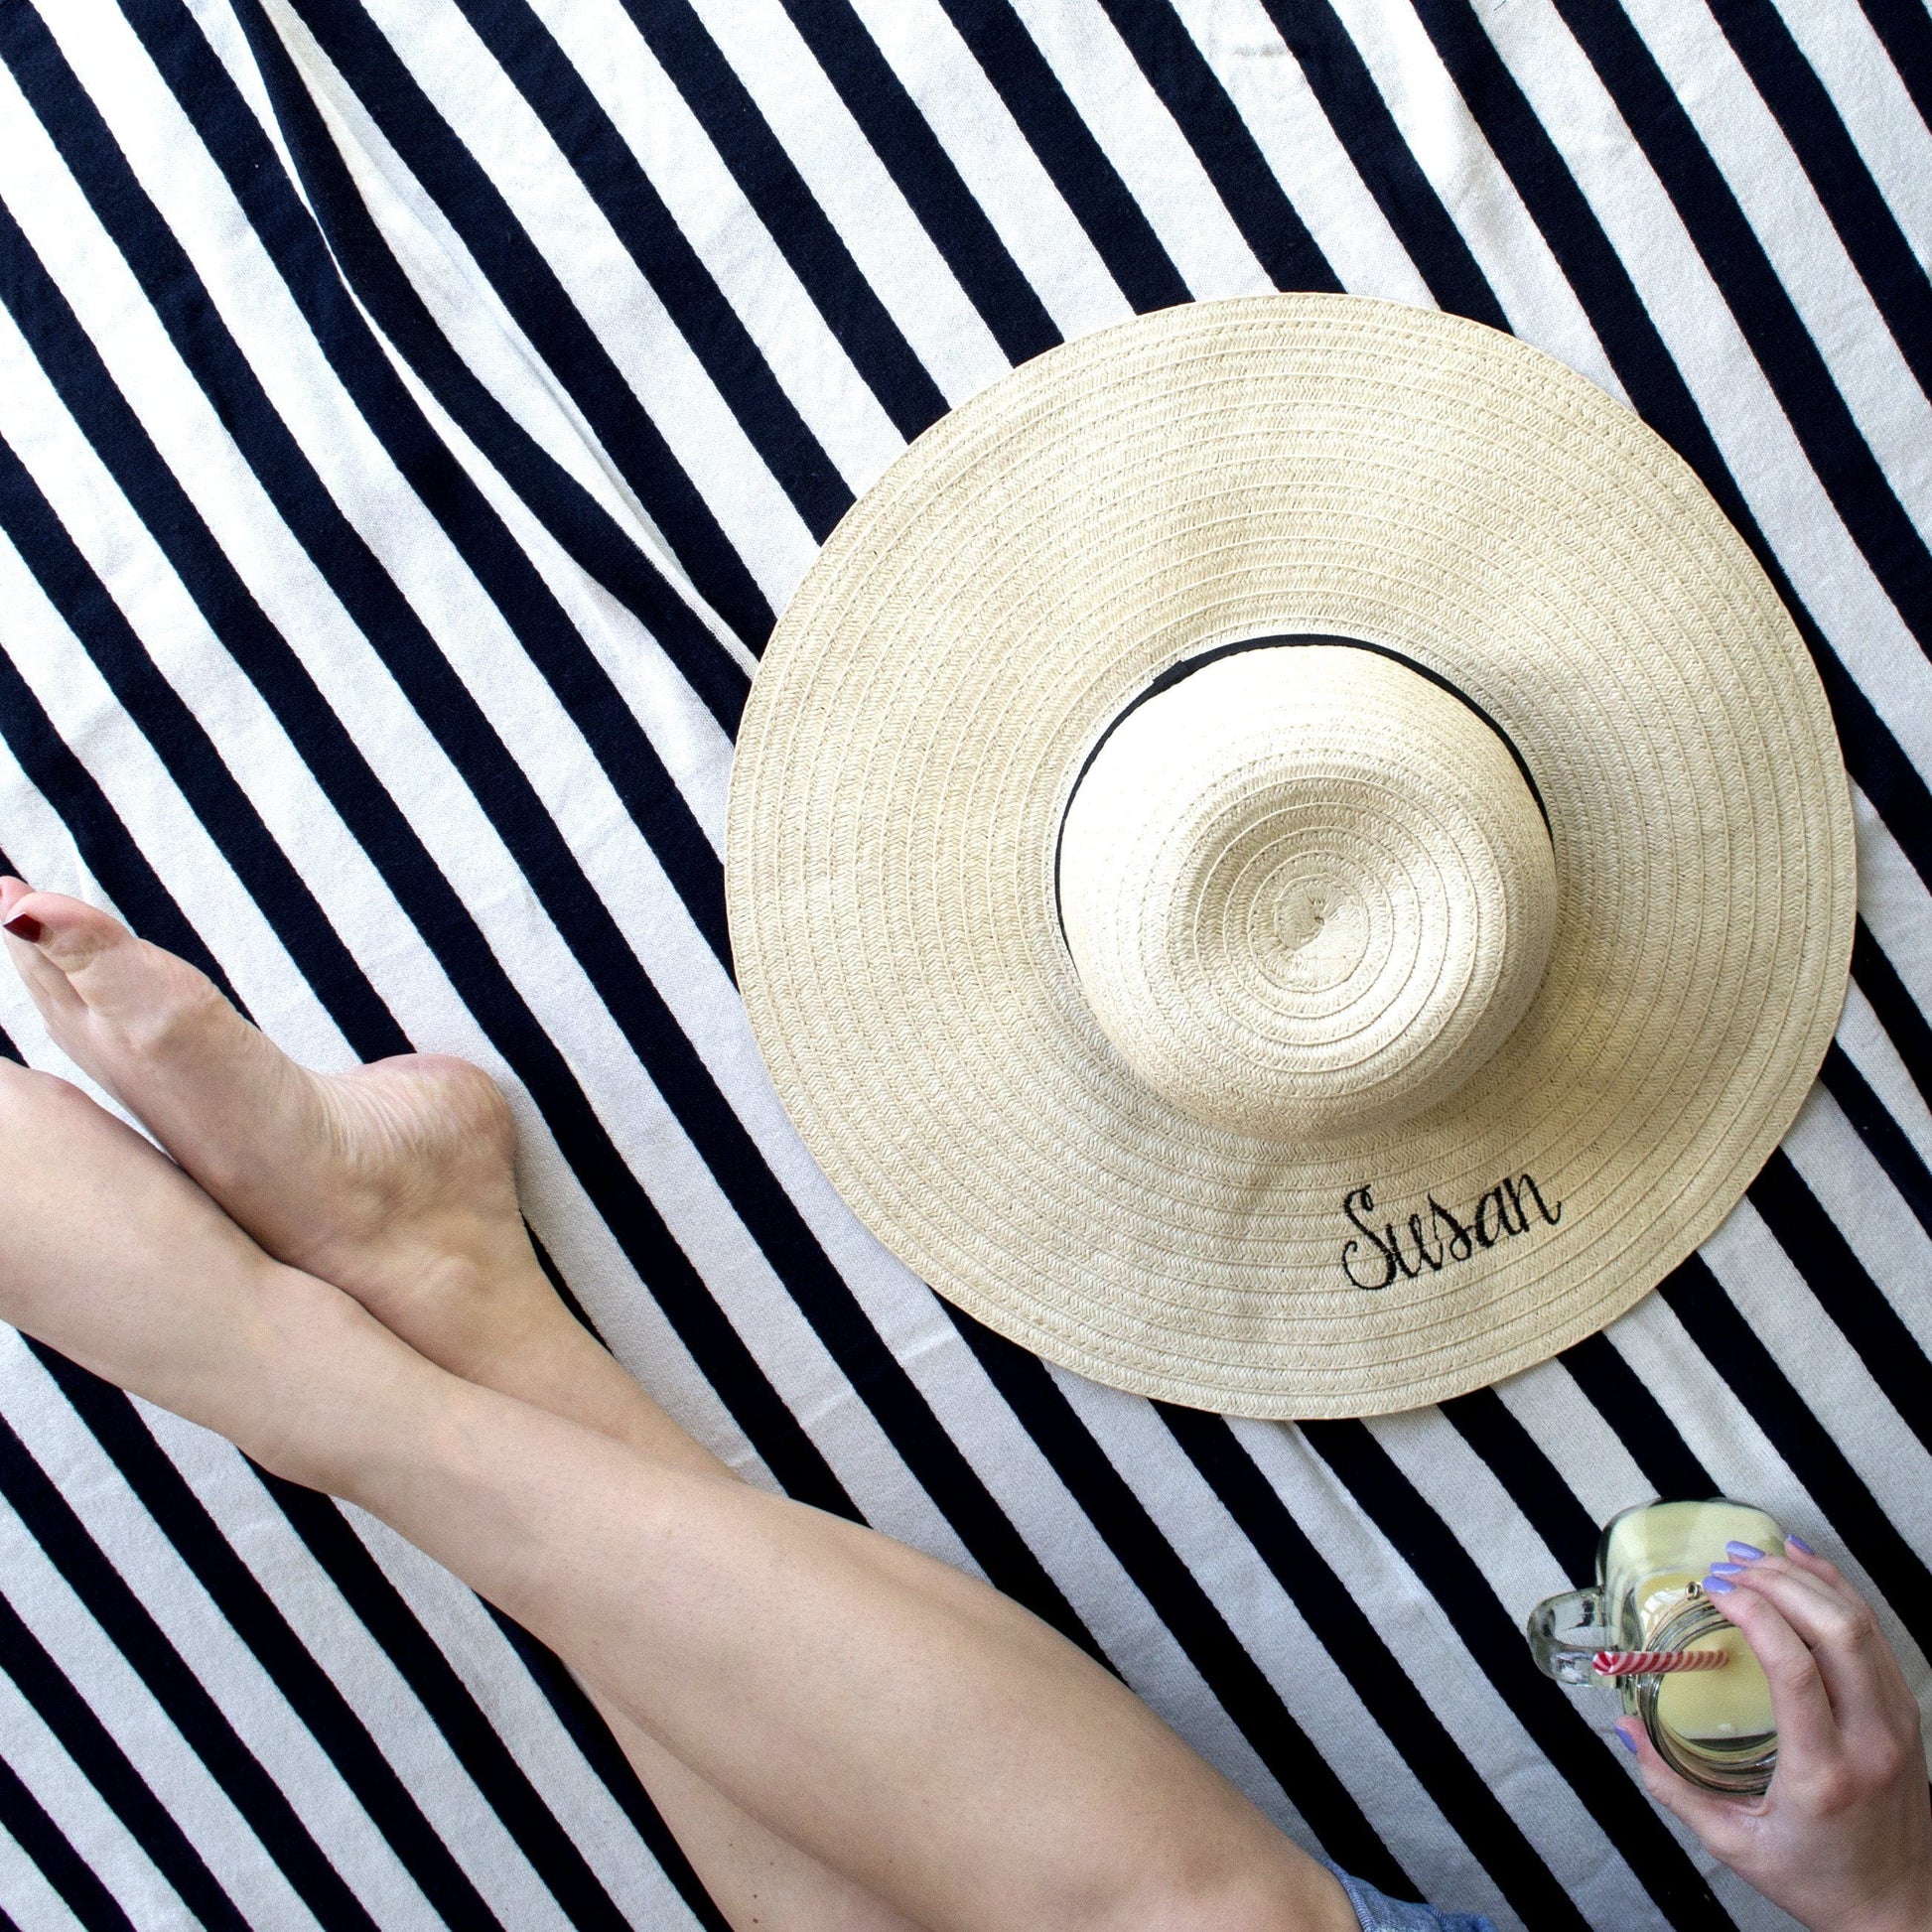 Personalised Summer Straw Hat, Hats, - ALPHS 